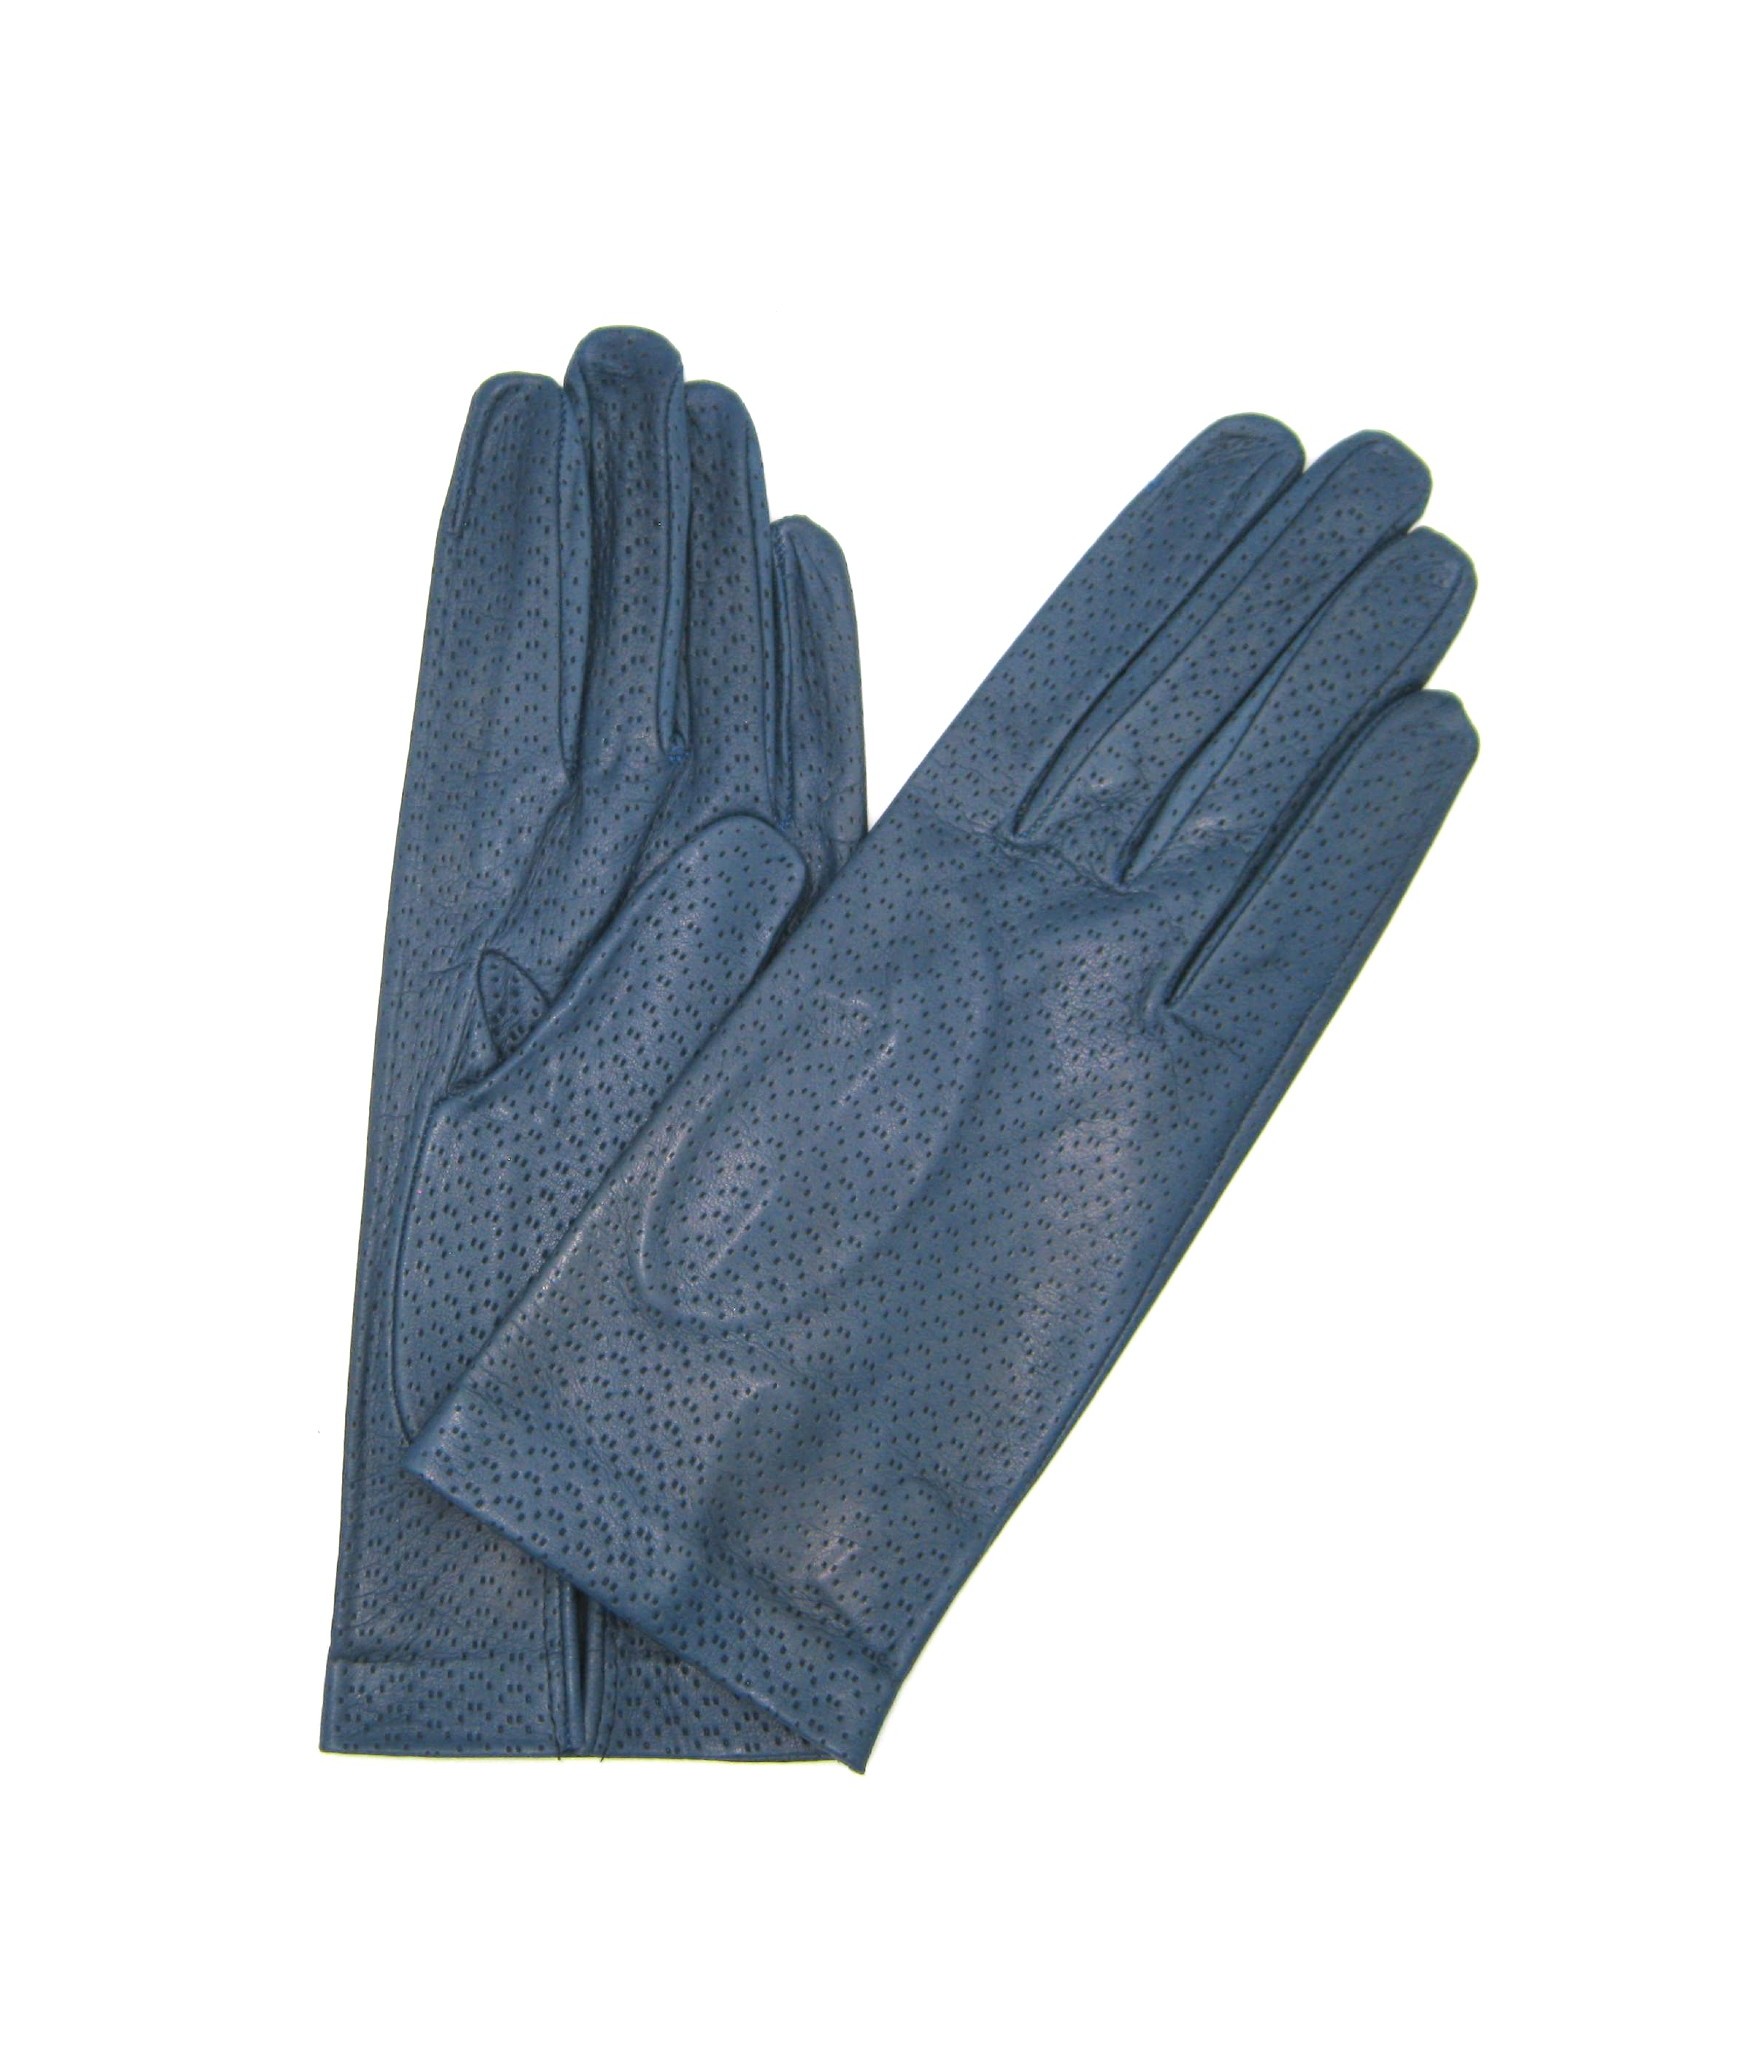 Nappa leather gloves unlined   Dark Denim